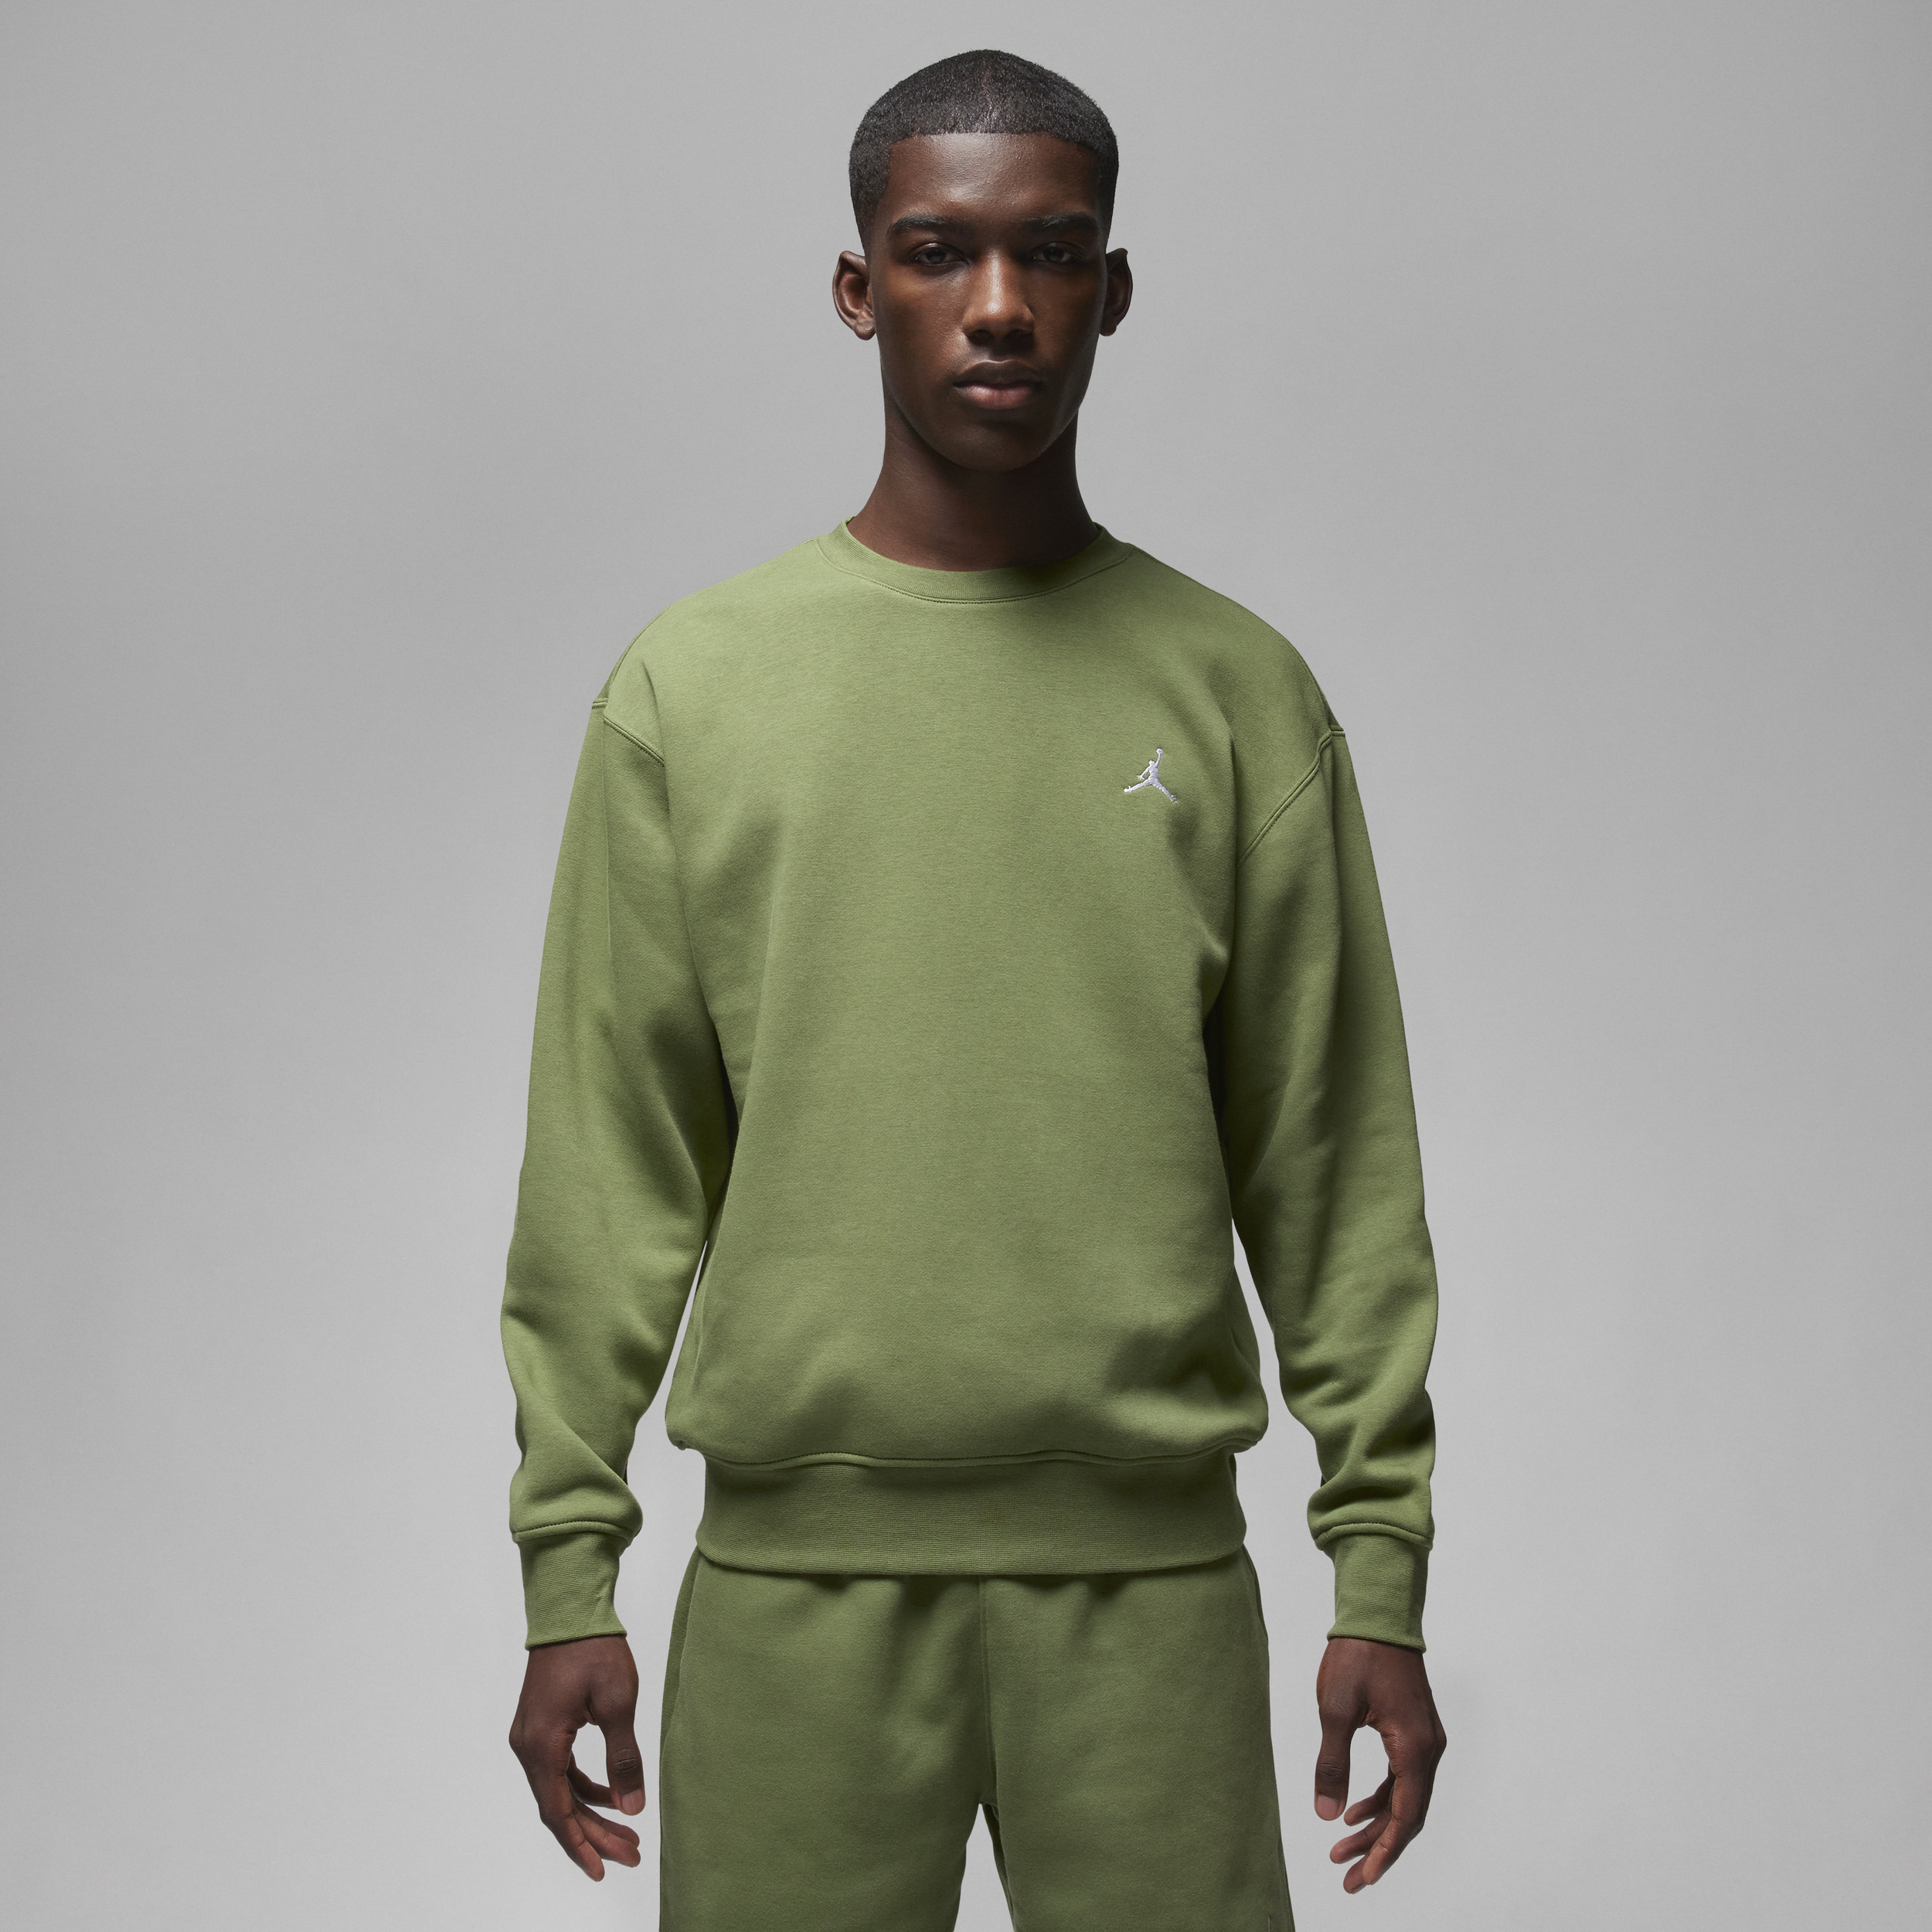 Jordan Brooklyn Fleece-sweatshirt med rund hals til mænd - grøn